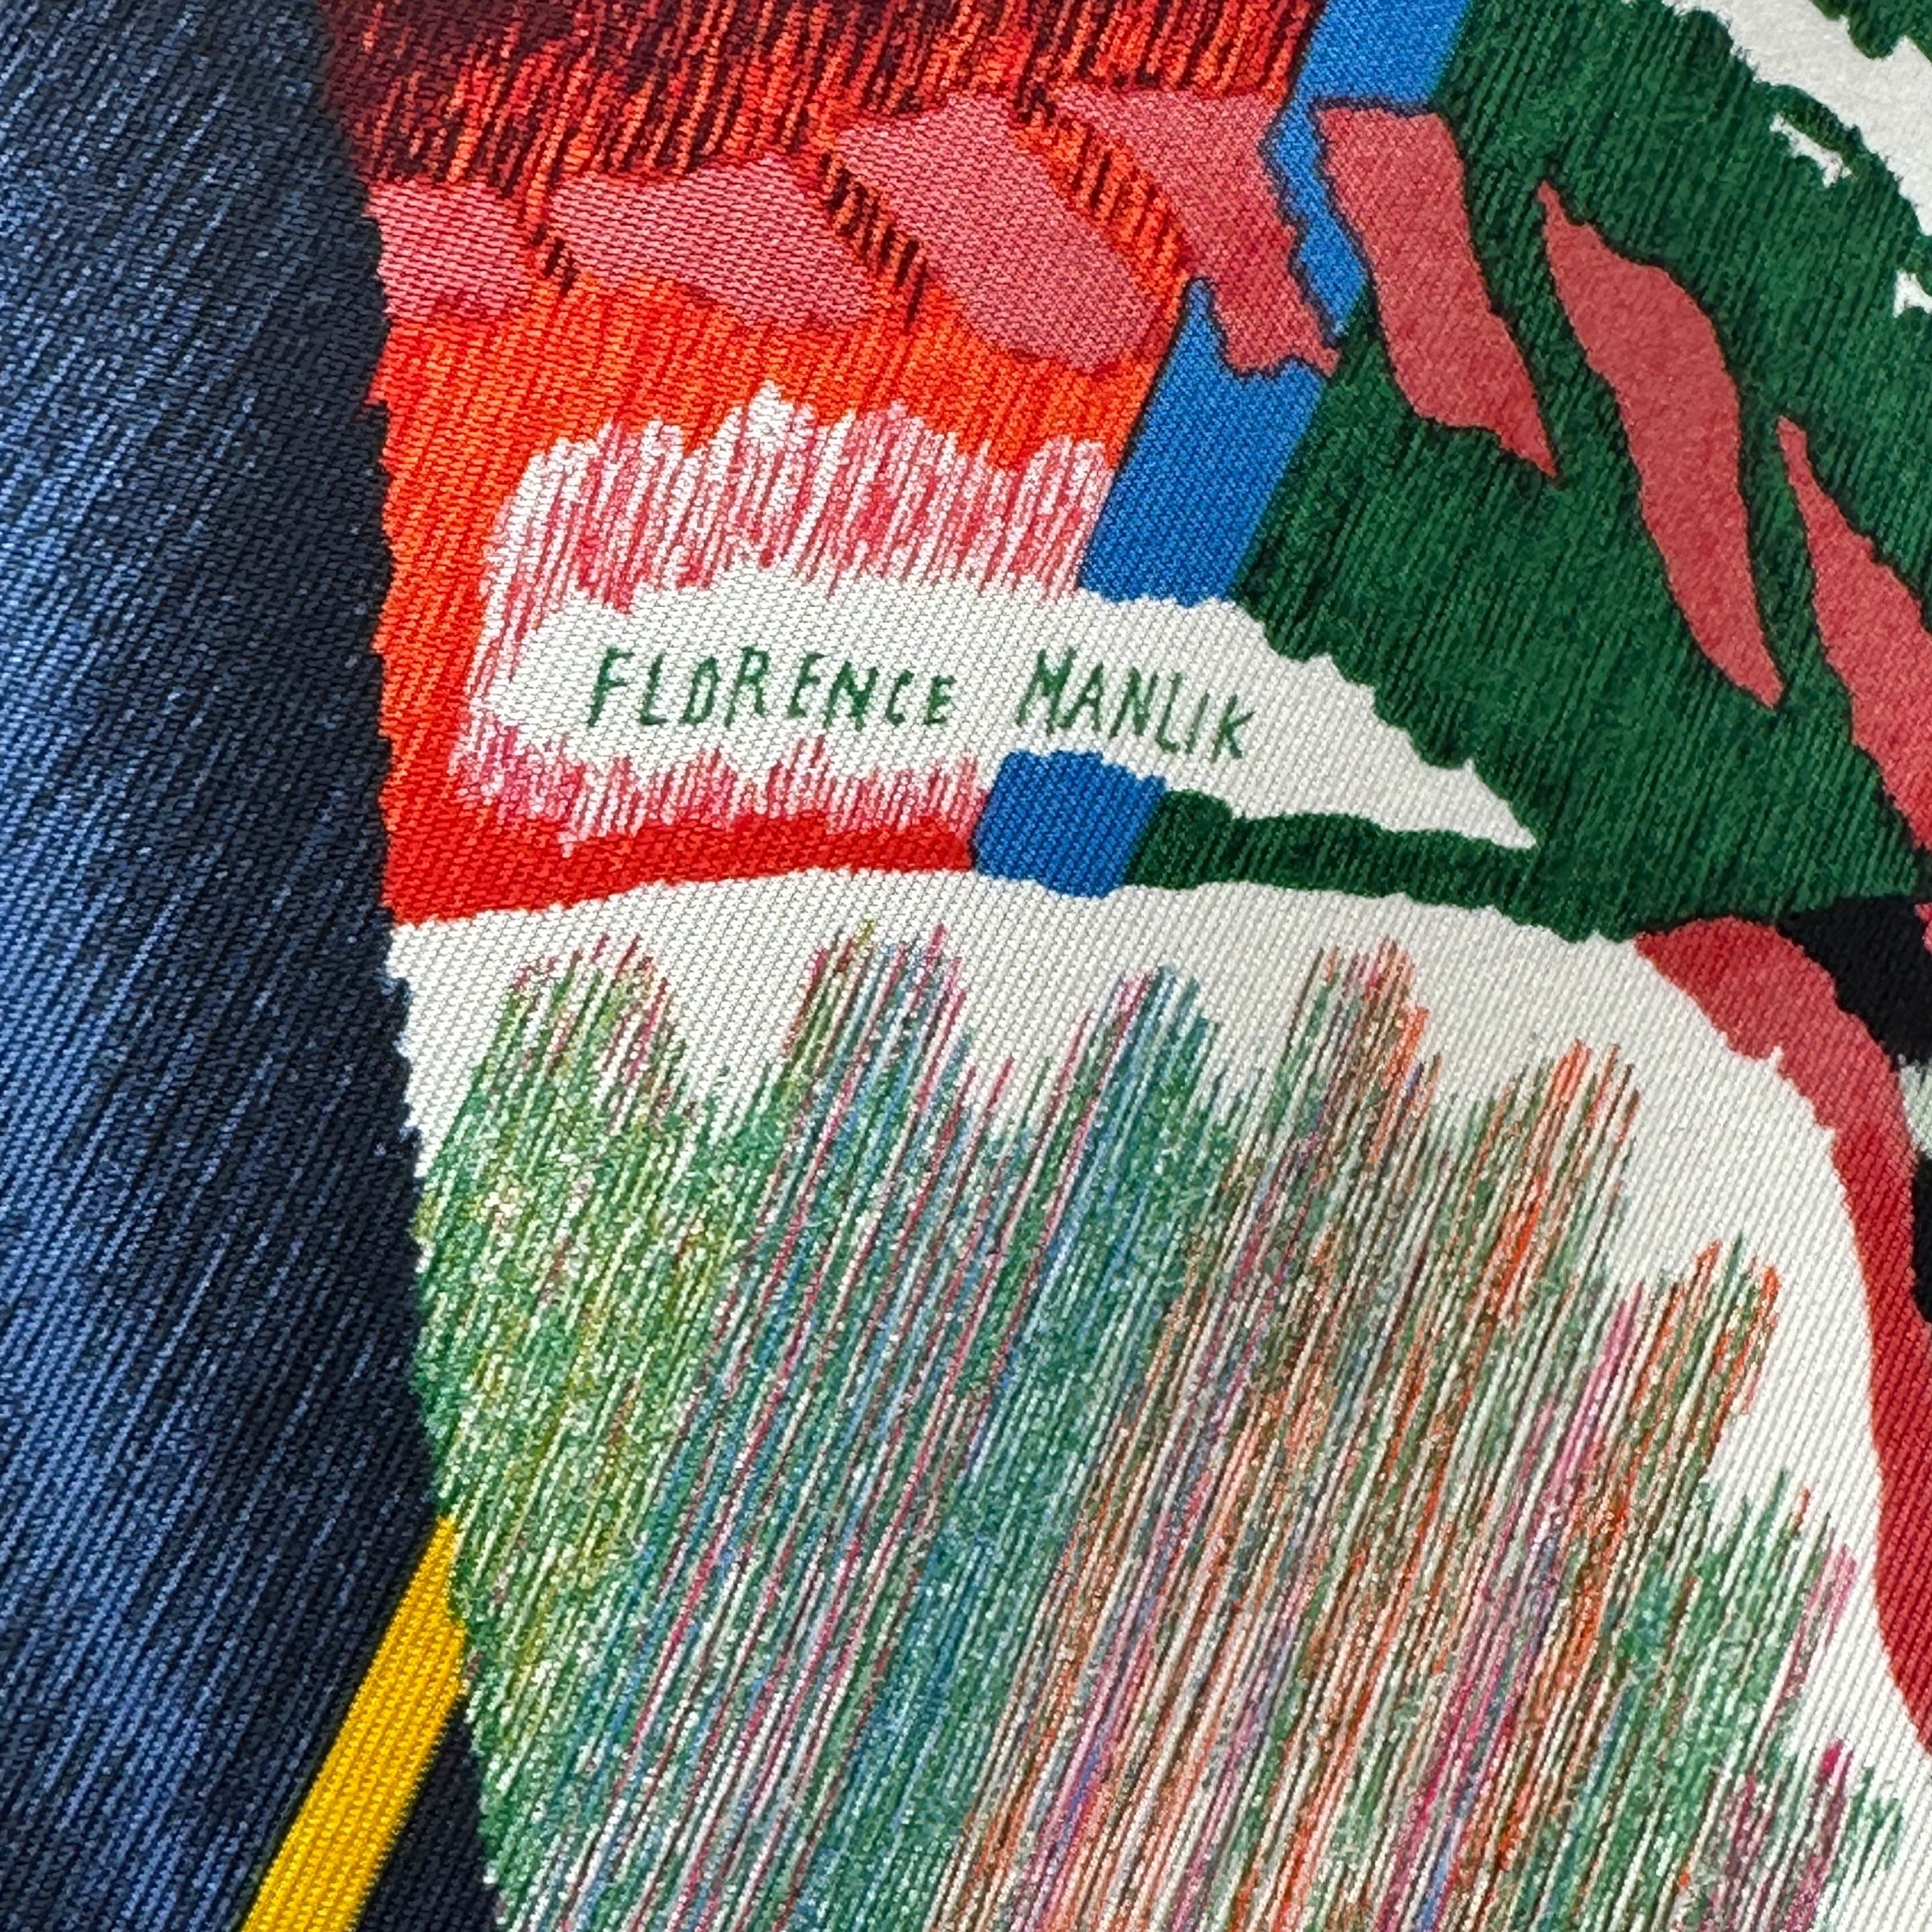 signature-florence-manlik-sur-Analyzing image  foulard-carre-hermes-le-chat-carre